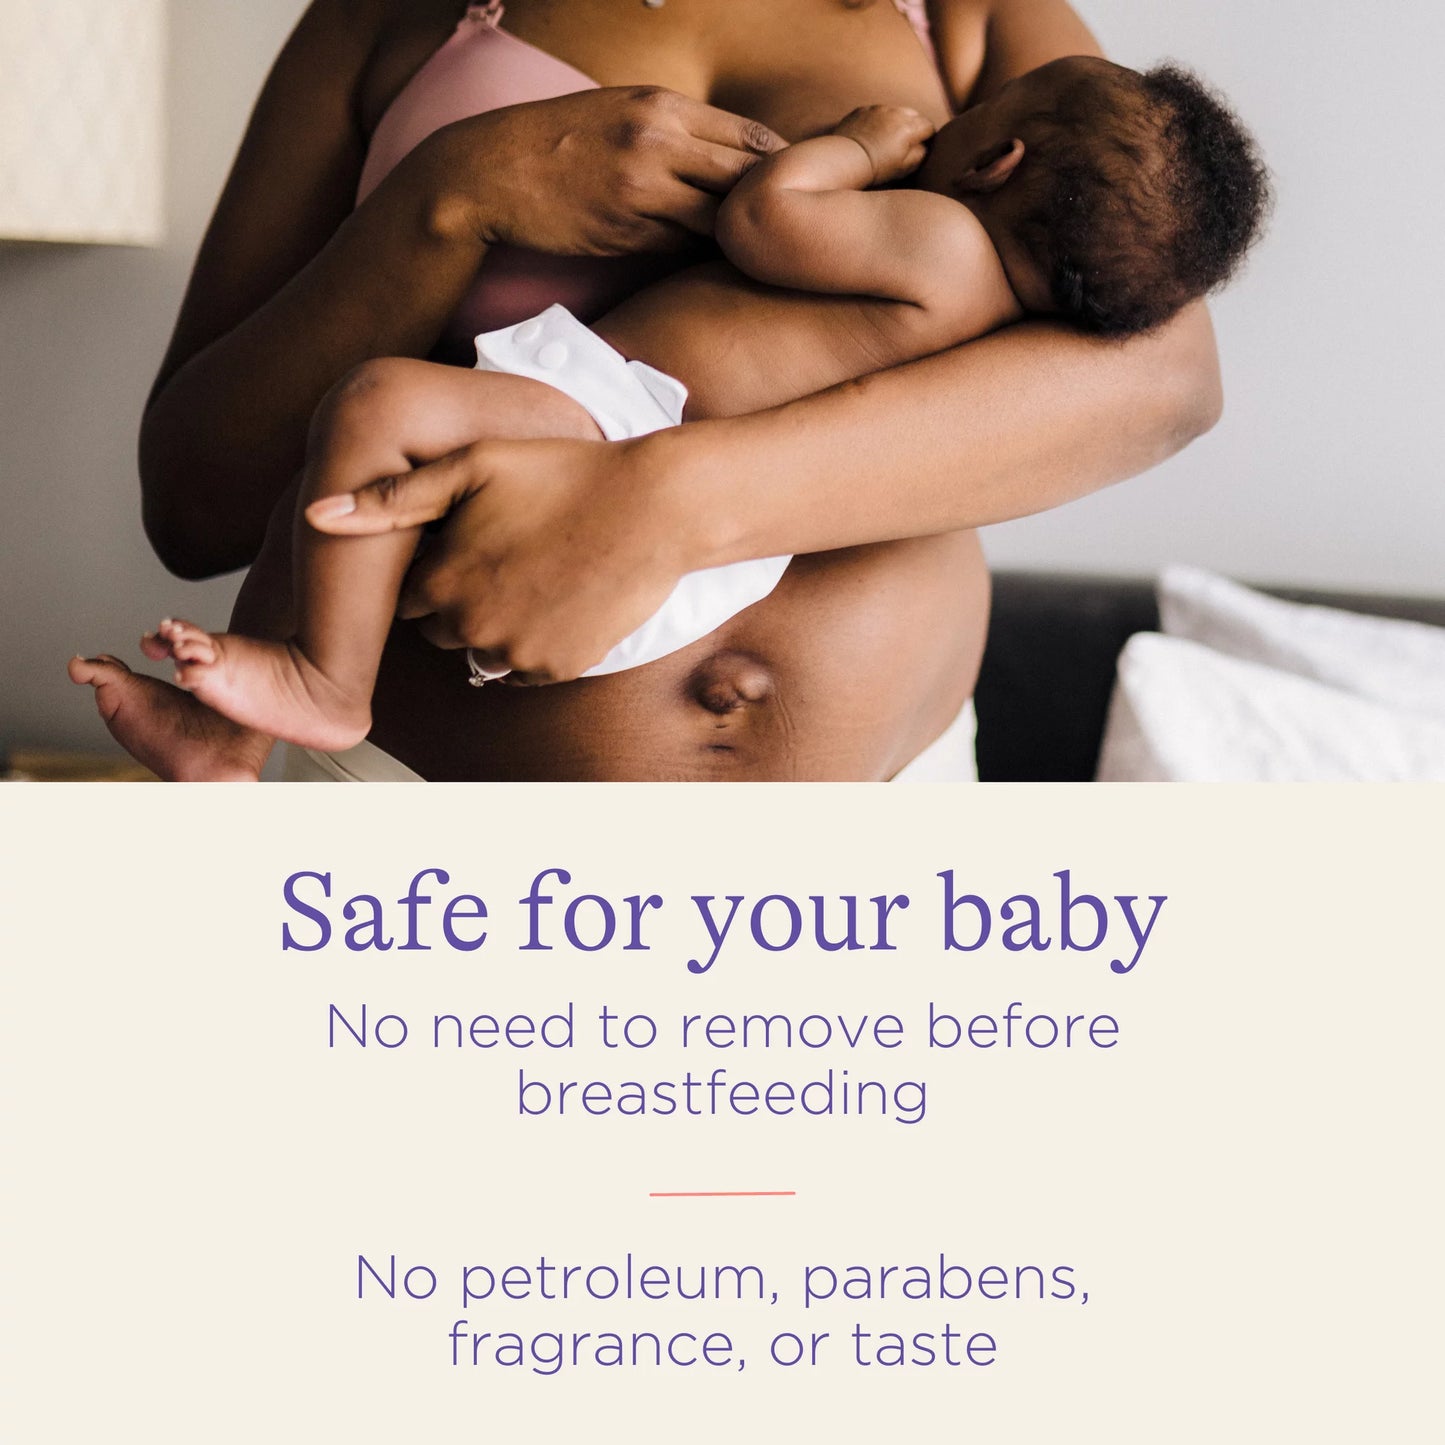 Lansinoh Organic Nipple Balm, Breastfeeding Essentials, 2 Ounces